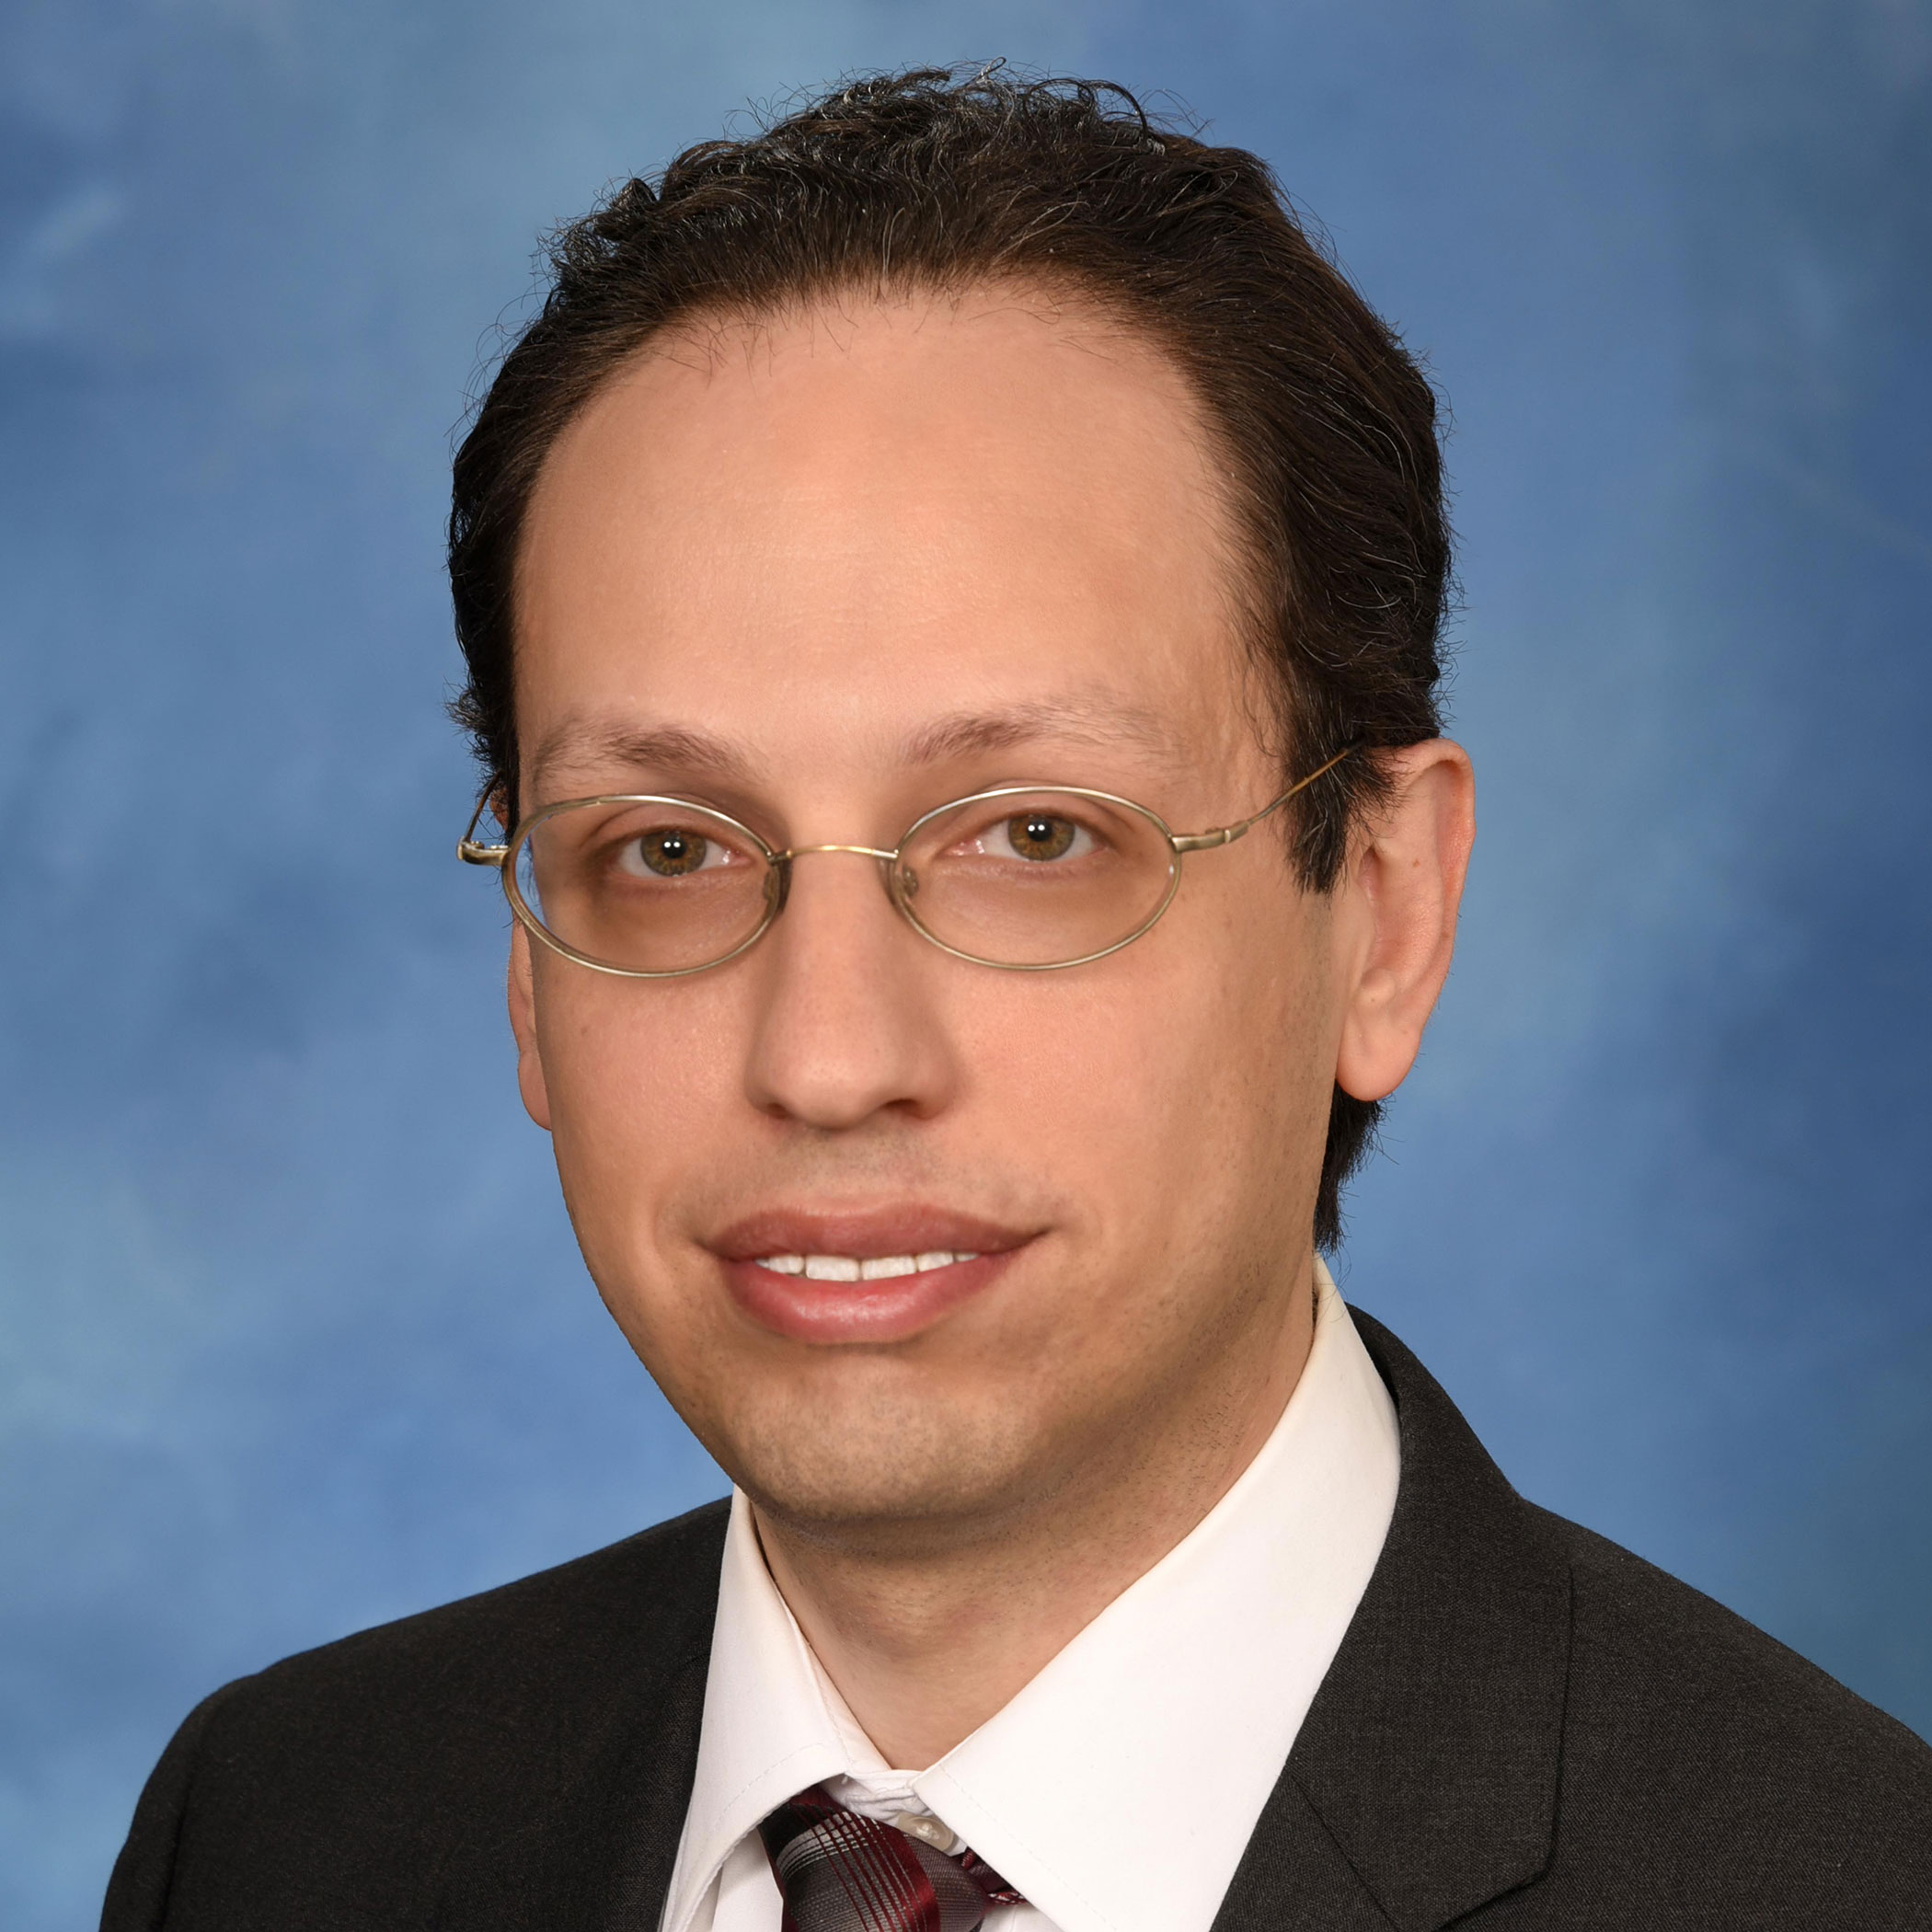 Steven J. Eliades, MD, PhD